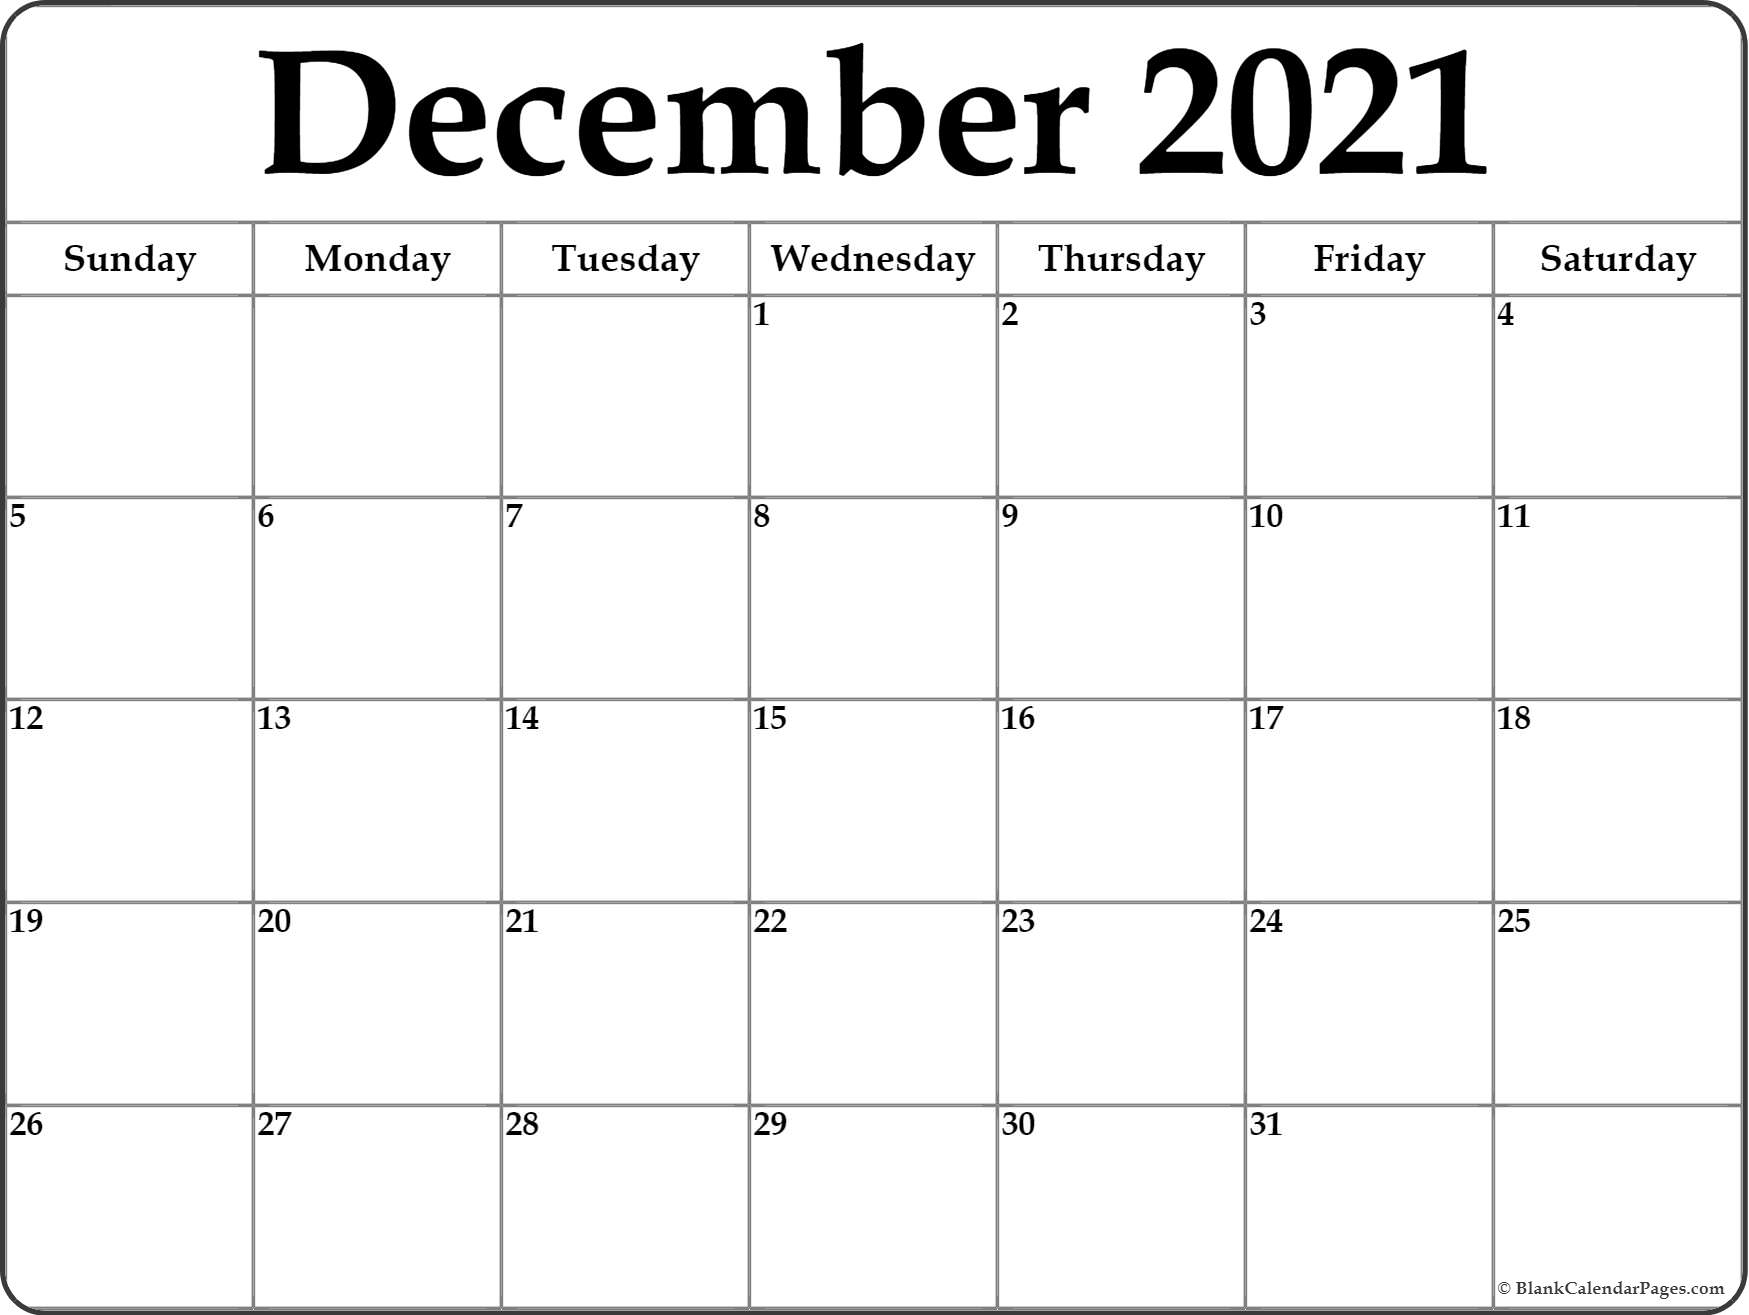 Catch Calendars For November And December 2021